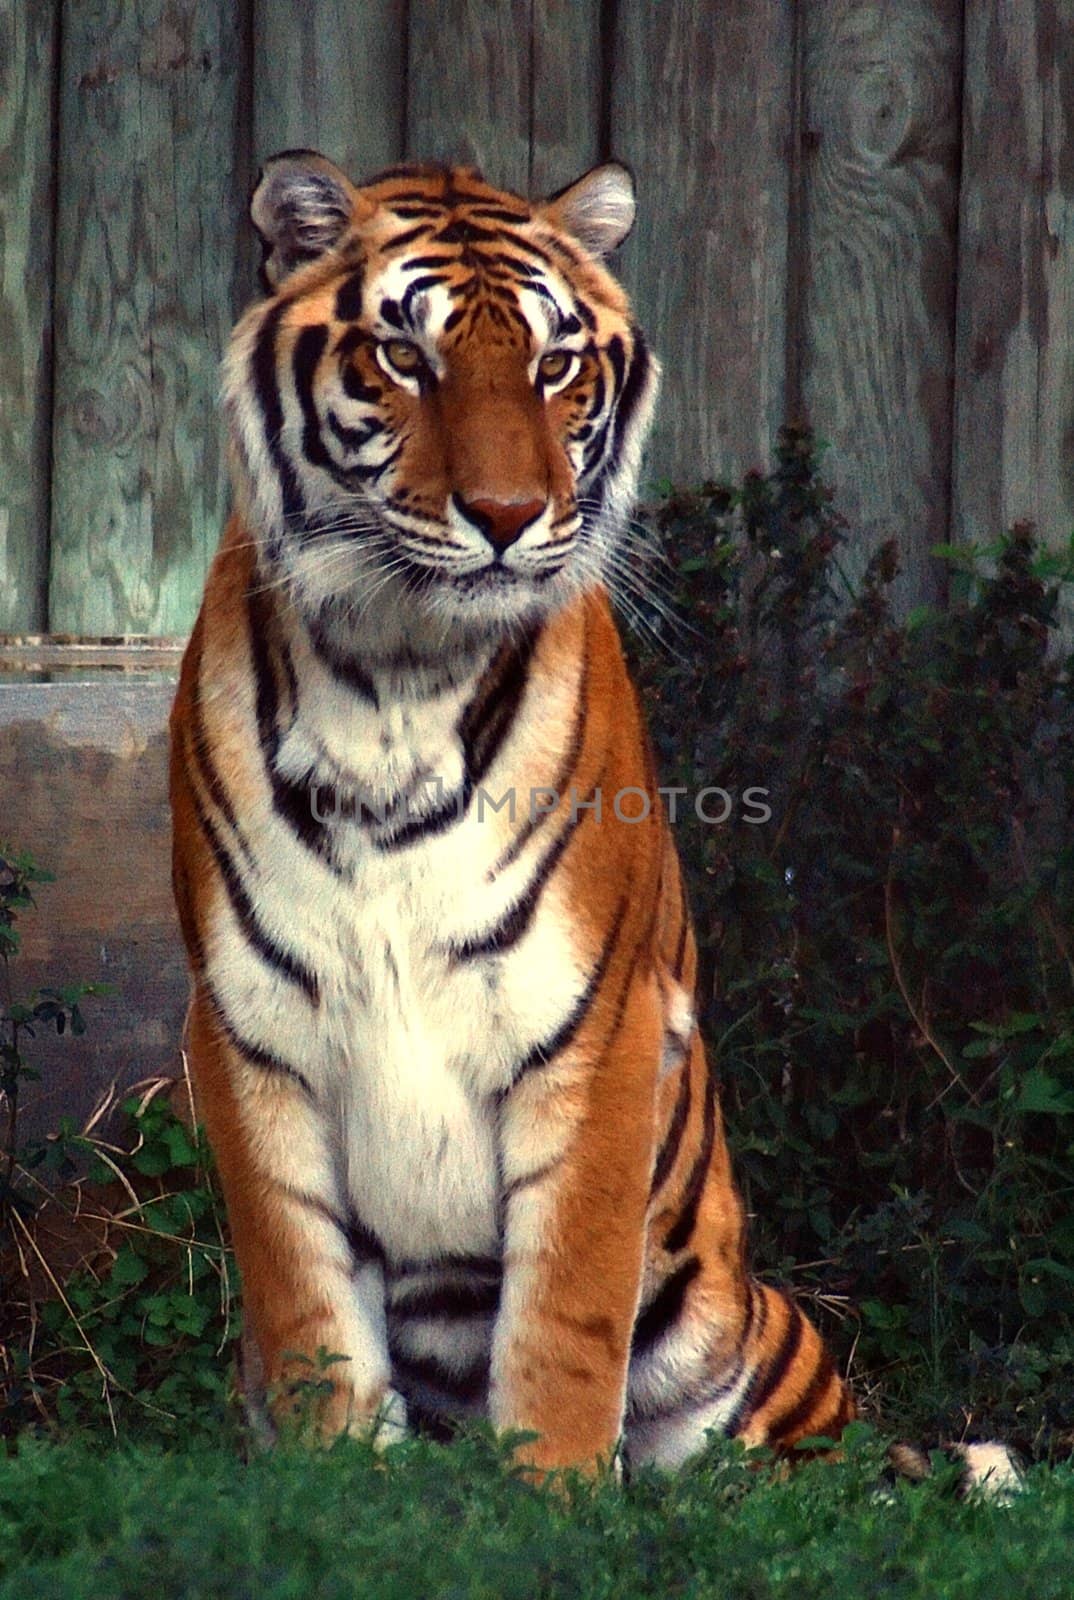 Tiger by mahnken